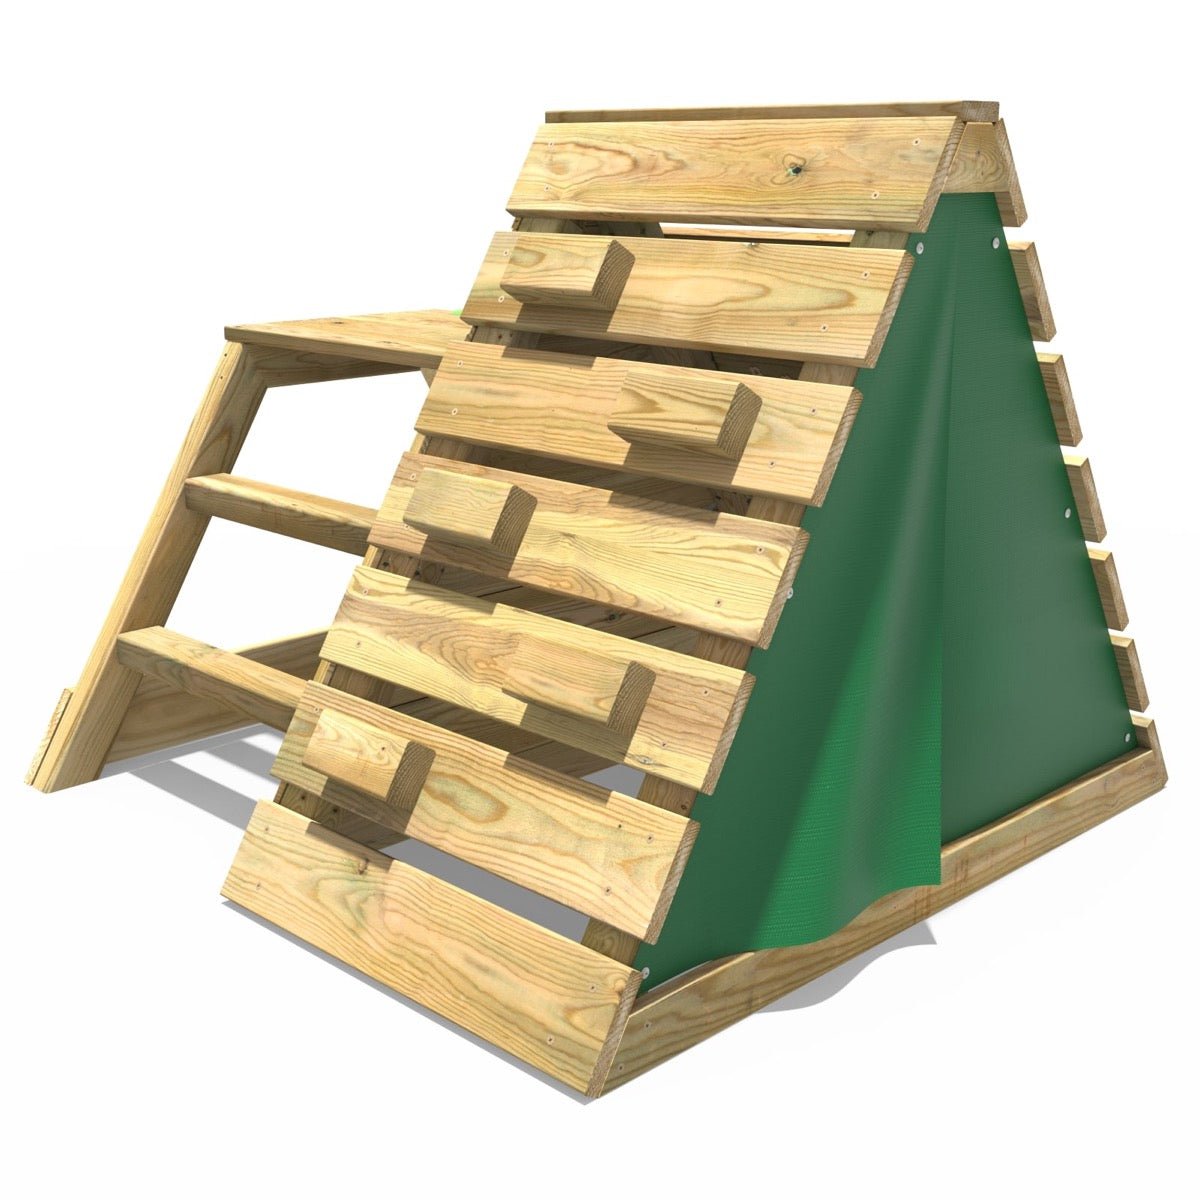 Rebo Mini Wooden Climbing Pyramid Adventure Playset + Slide - Green